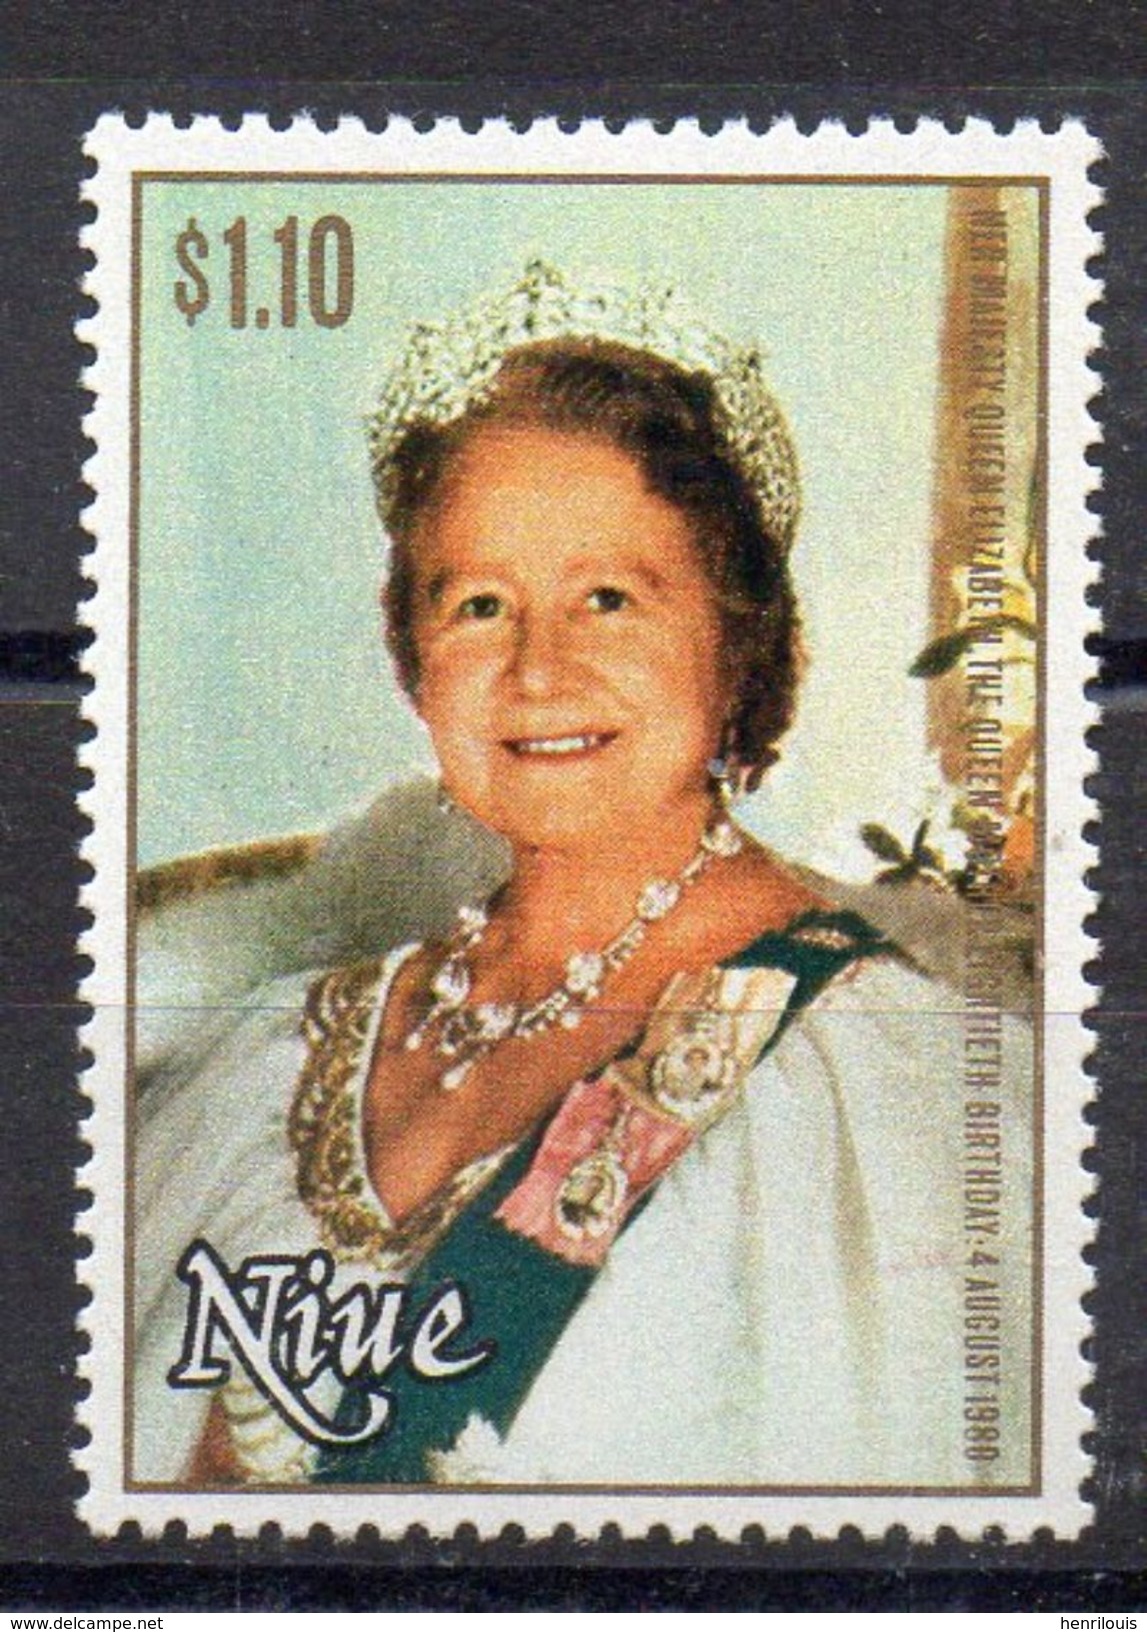 NIUE Timbre Neuf ** De 1980  (ref  4833 )  Famille Royale  Queen Mother - Niue